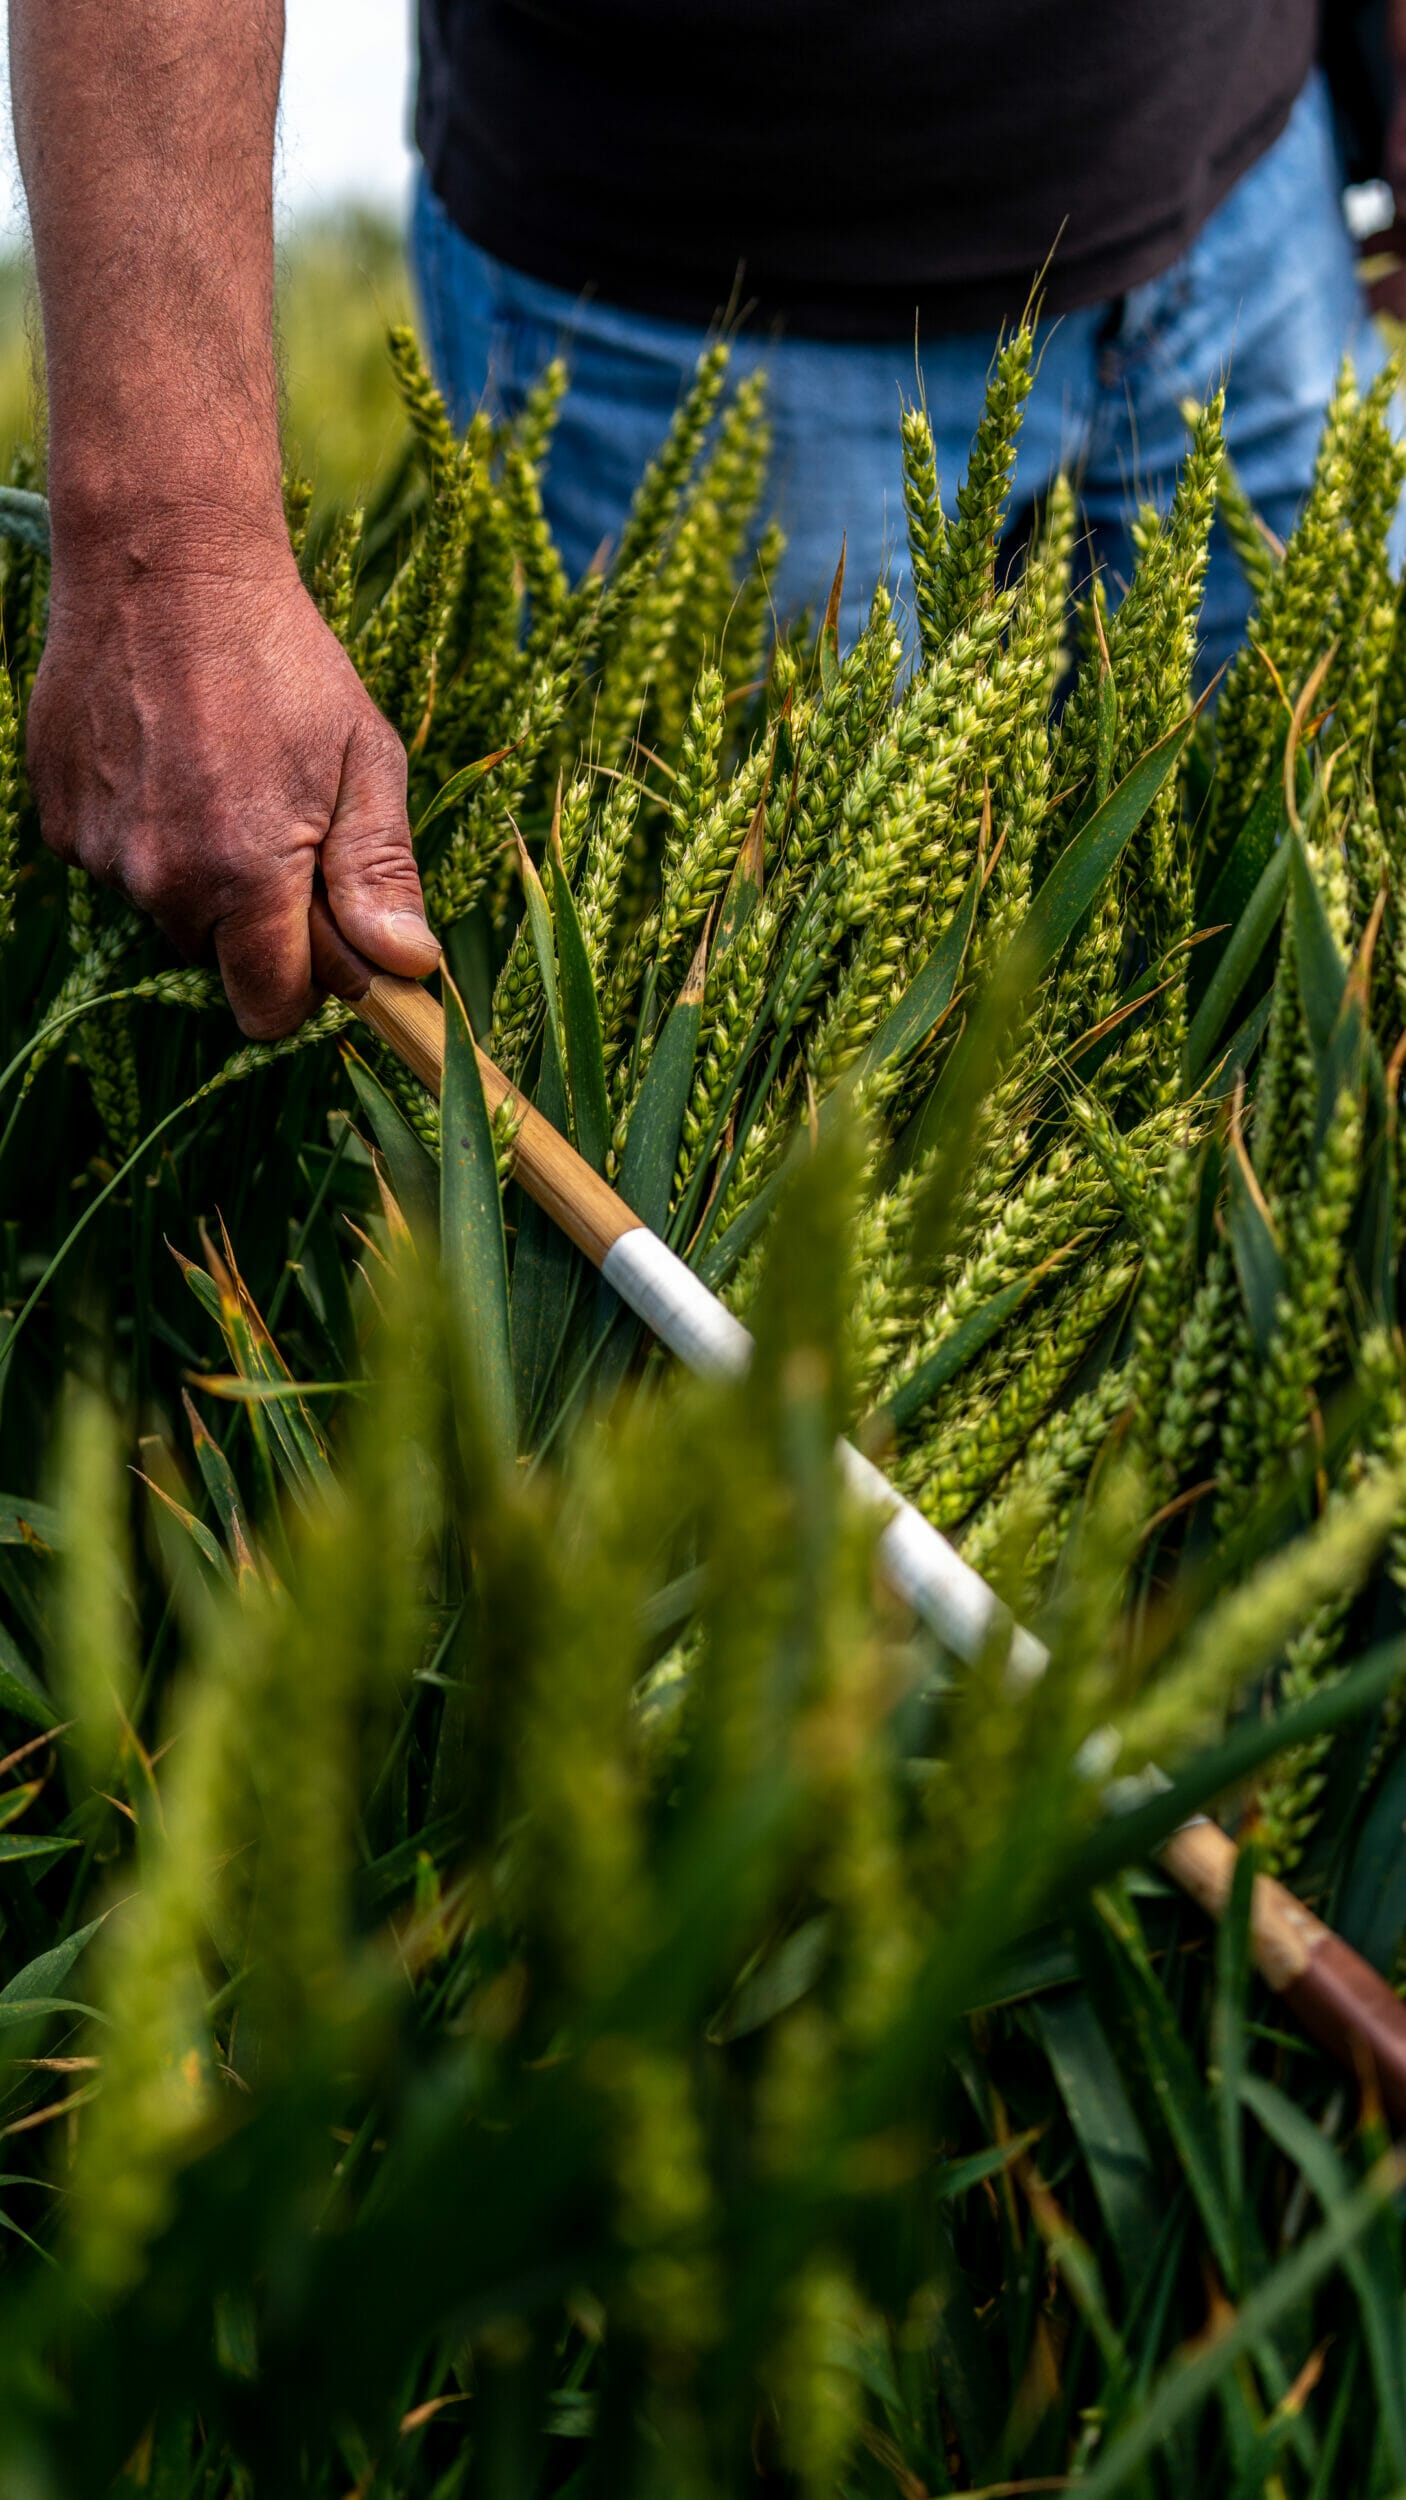 Inspecting wheat